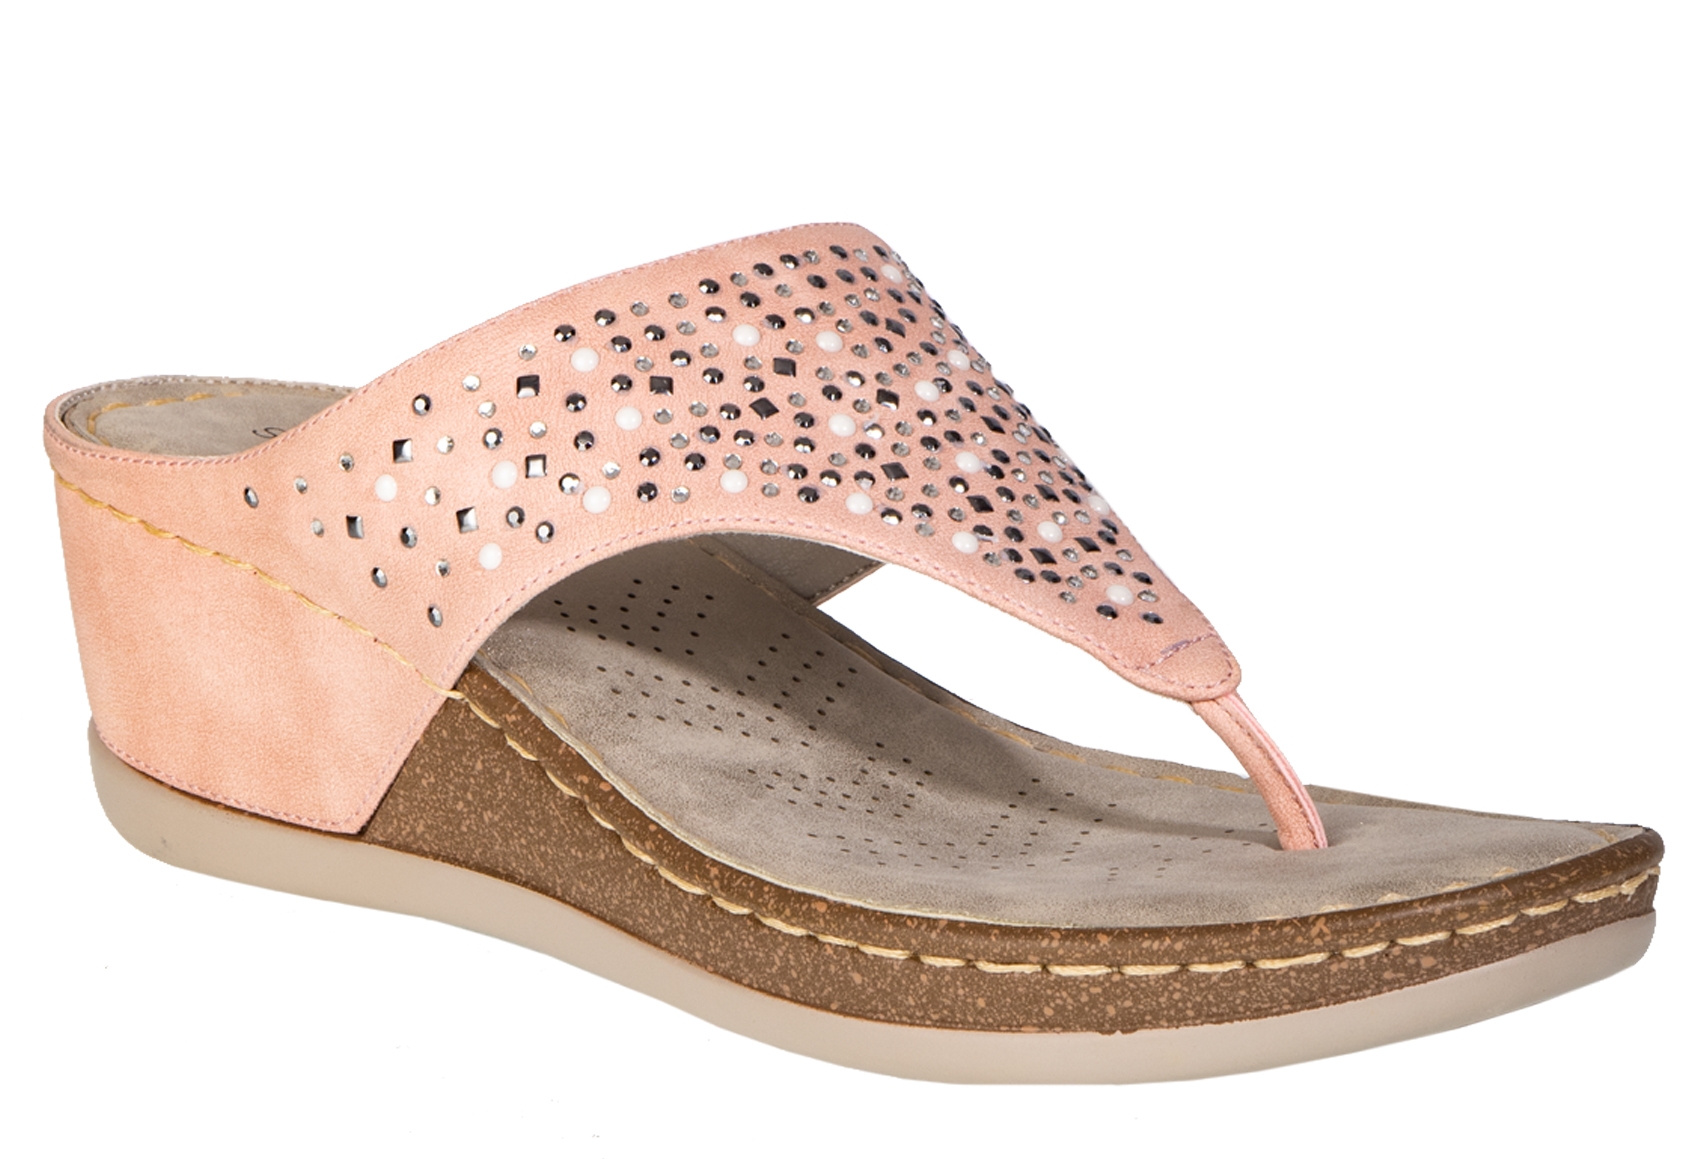 Khadim | Sharon By Khadim's Synthetic PU Sole Decorative Sandal For Women